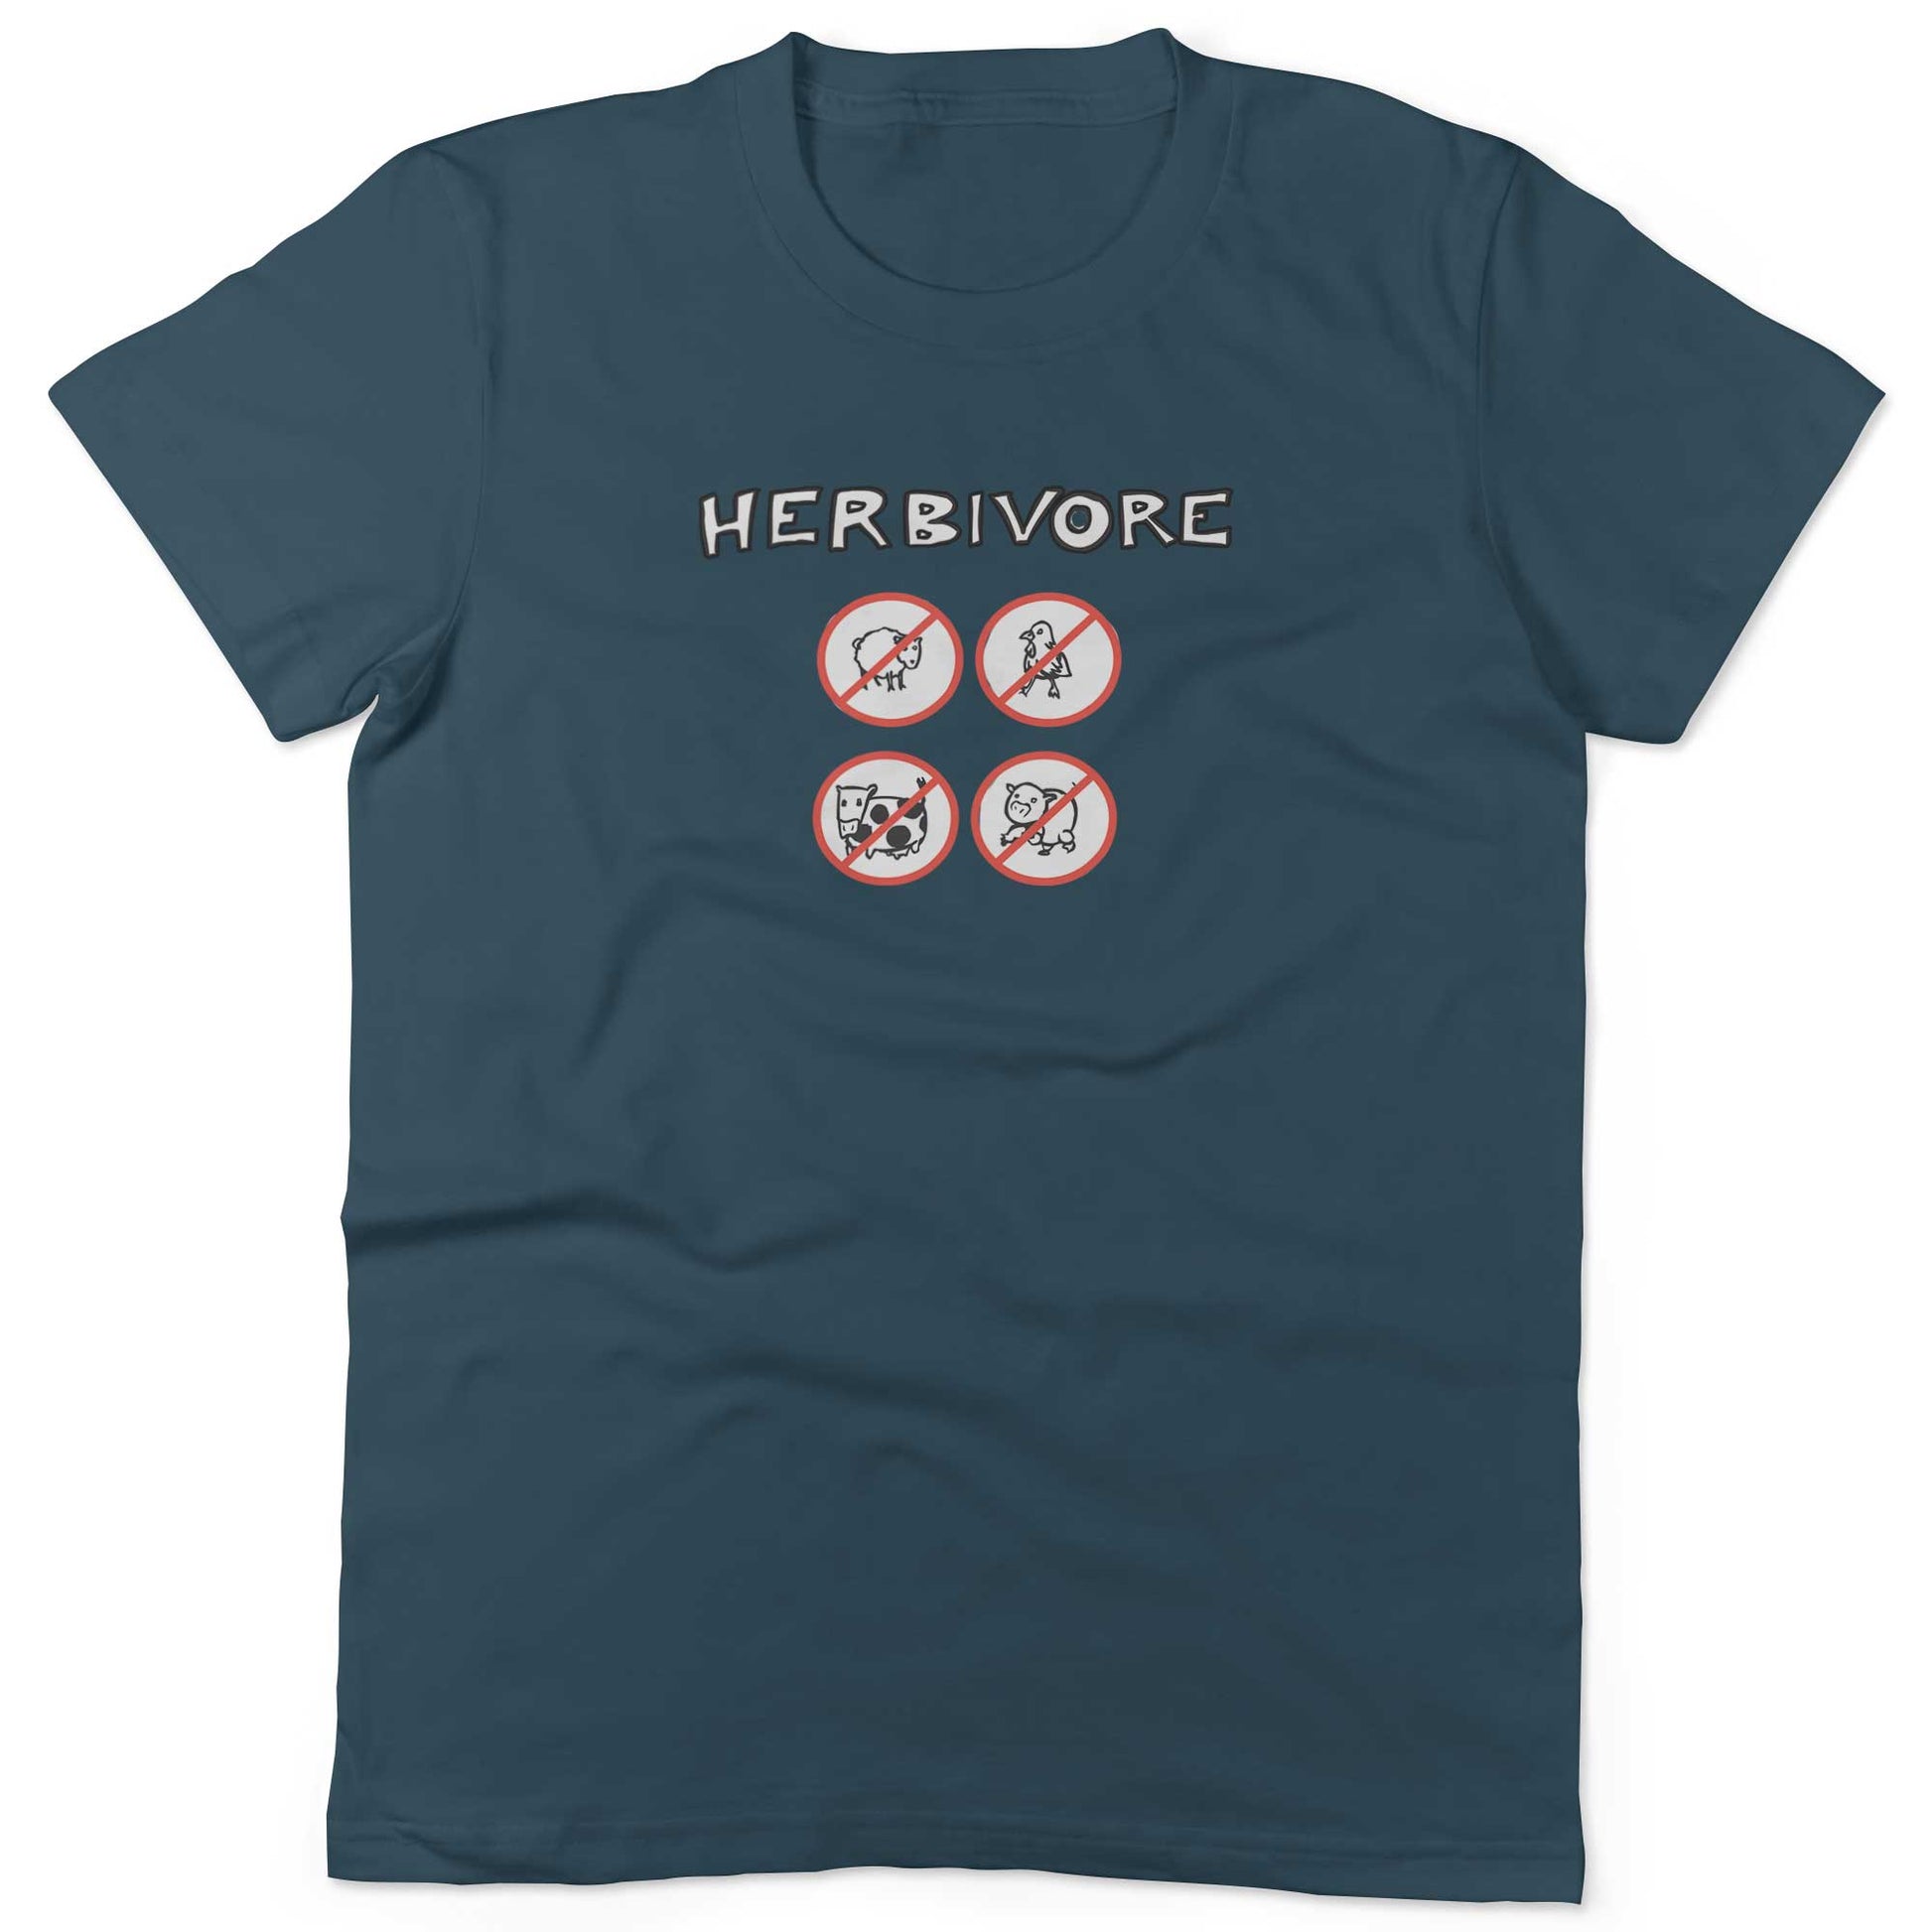 Herbivore Unisex Or Women's Cotton T-shirt-